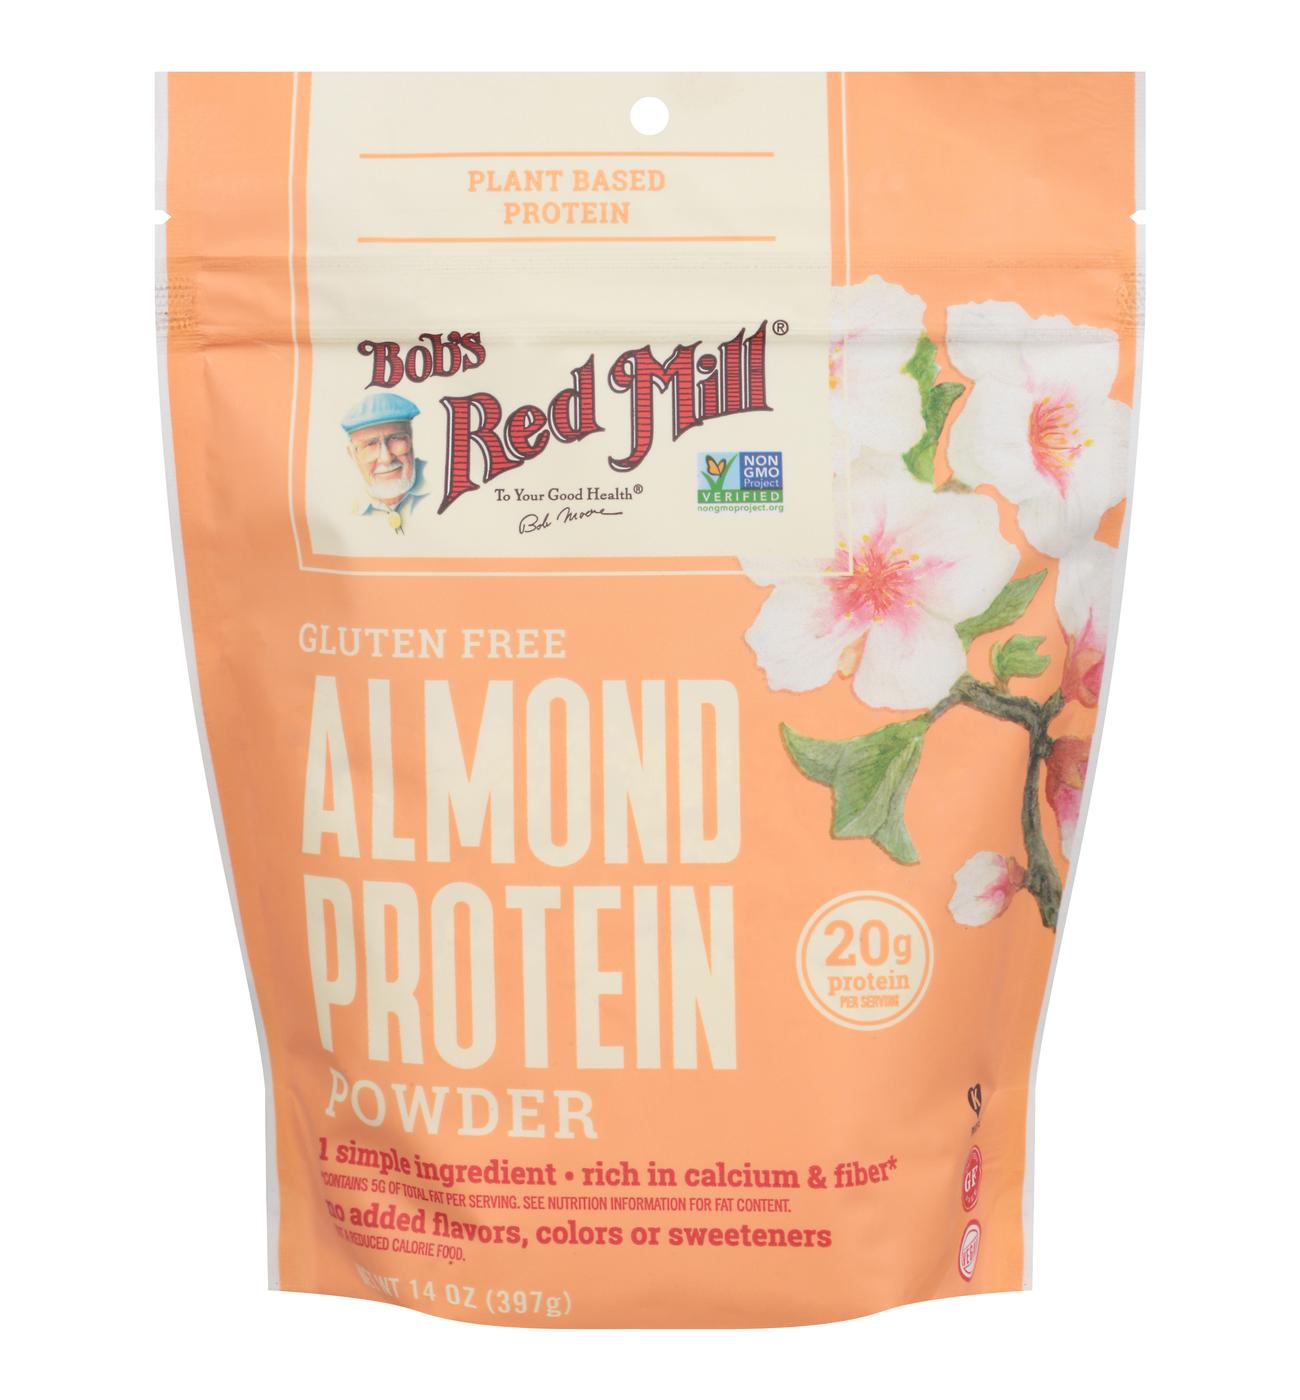 Bob's Red Mill Gluten Free Almond Protein Powder; image 1 of 2